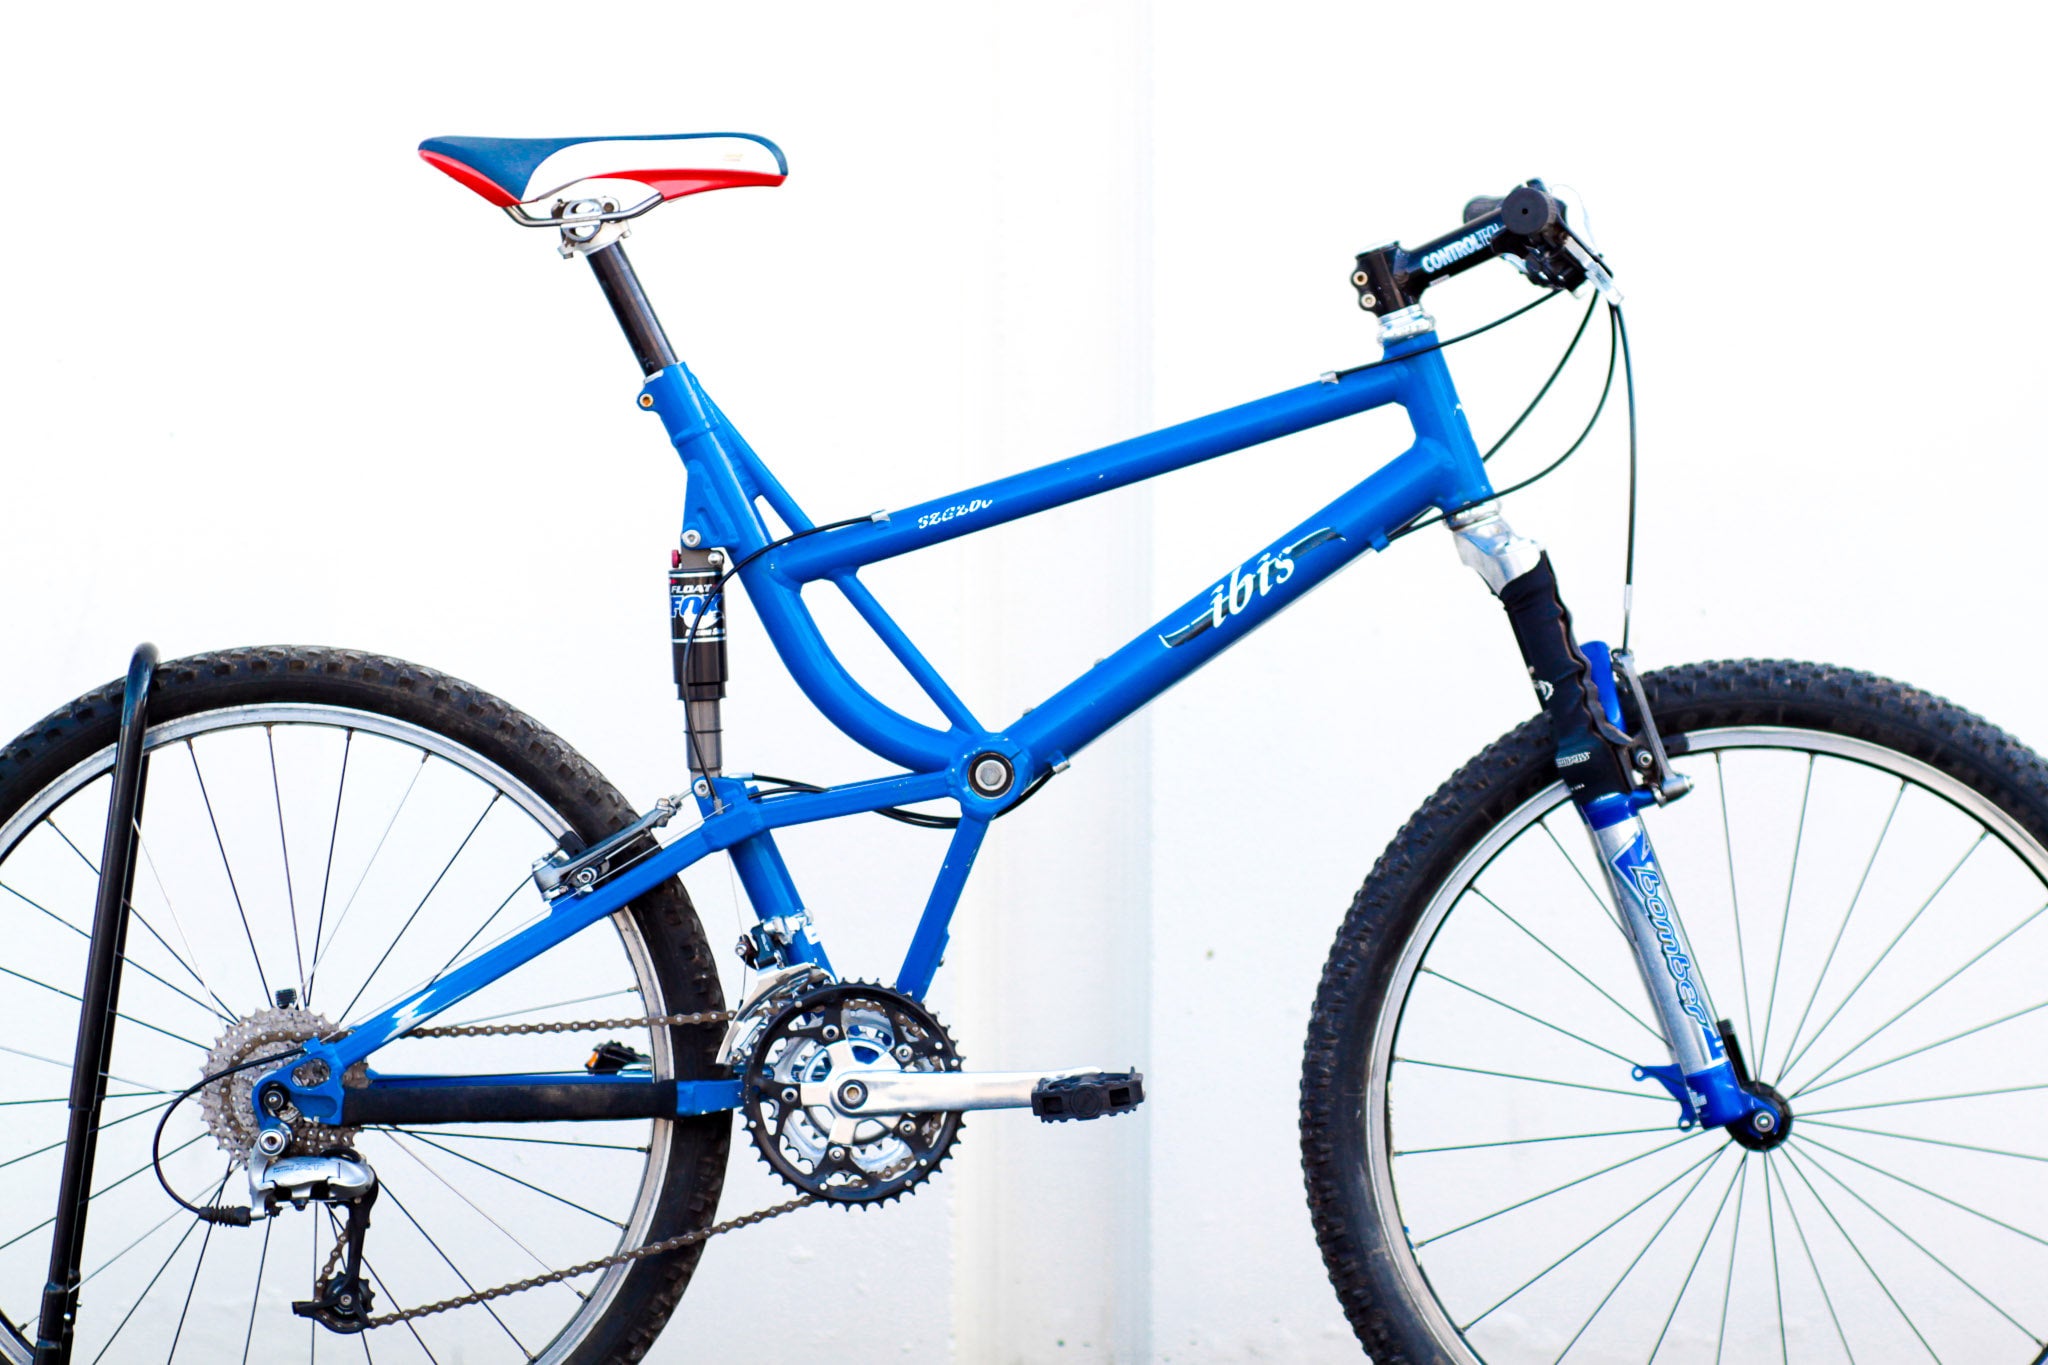 Ibis Szazbo Vintage Full Suspension Mountain Bike blue - VBBV Used Bikes for Sale - Silicon Valley Bicycle Exchange